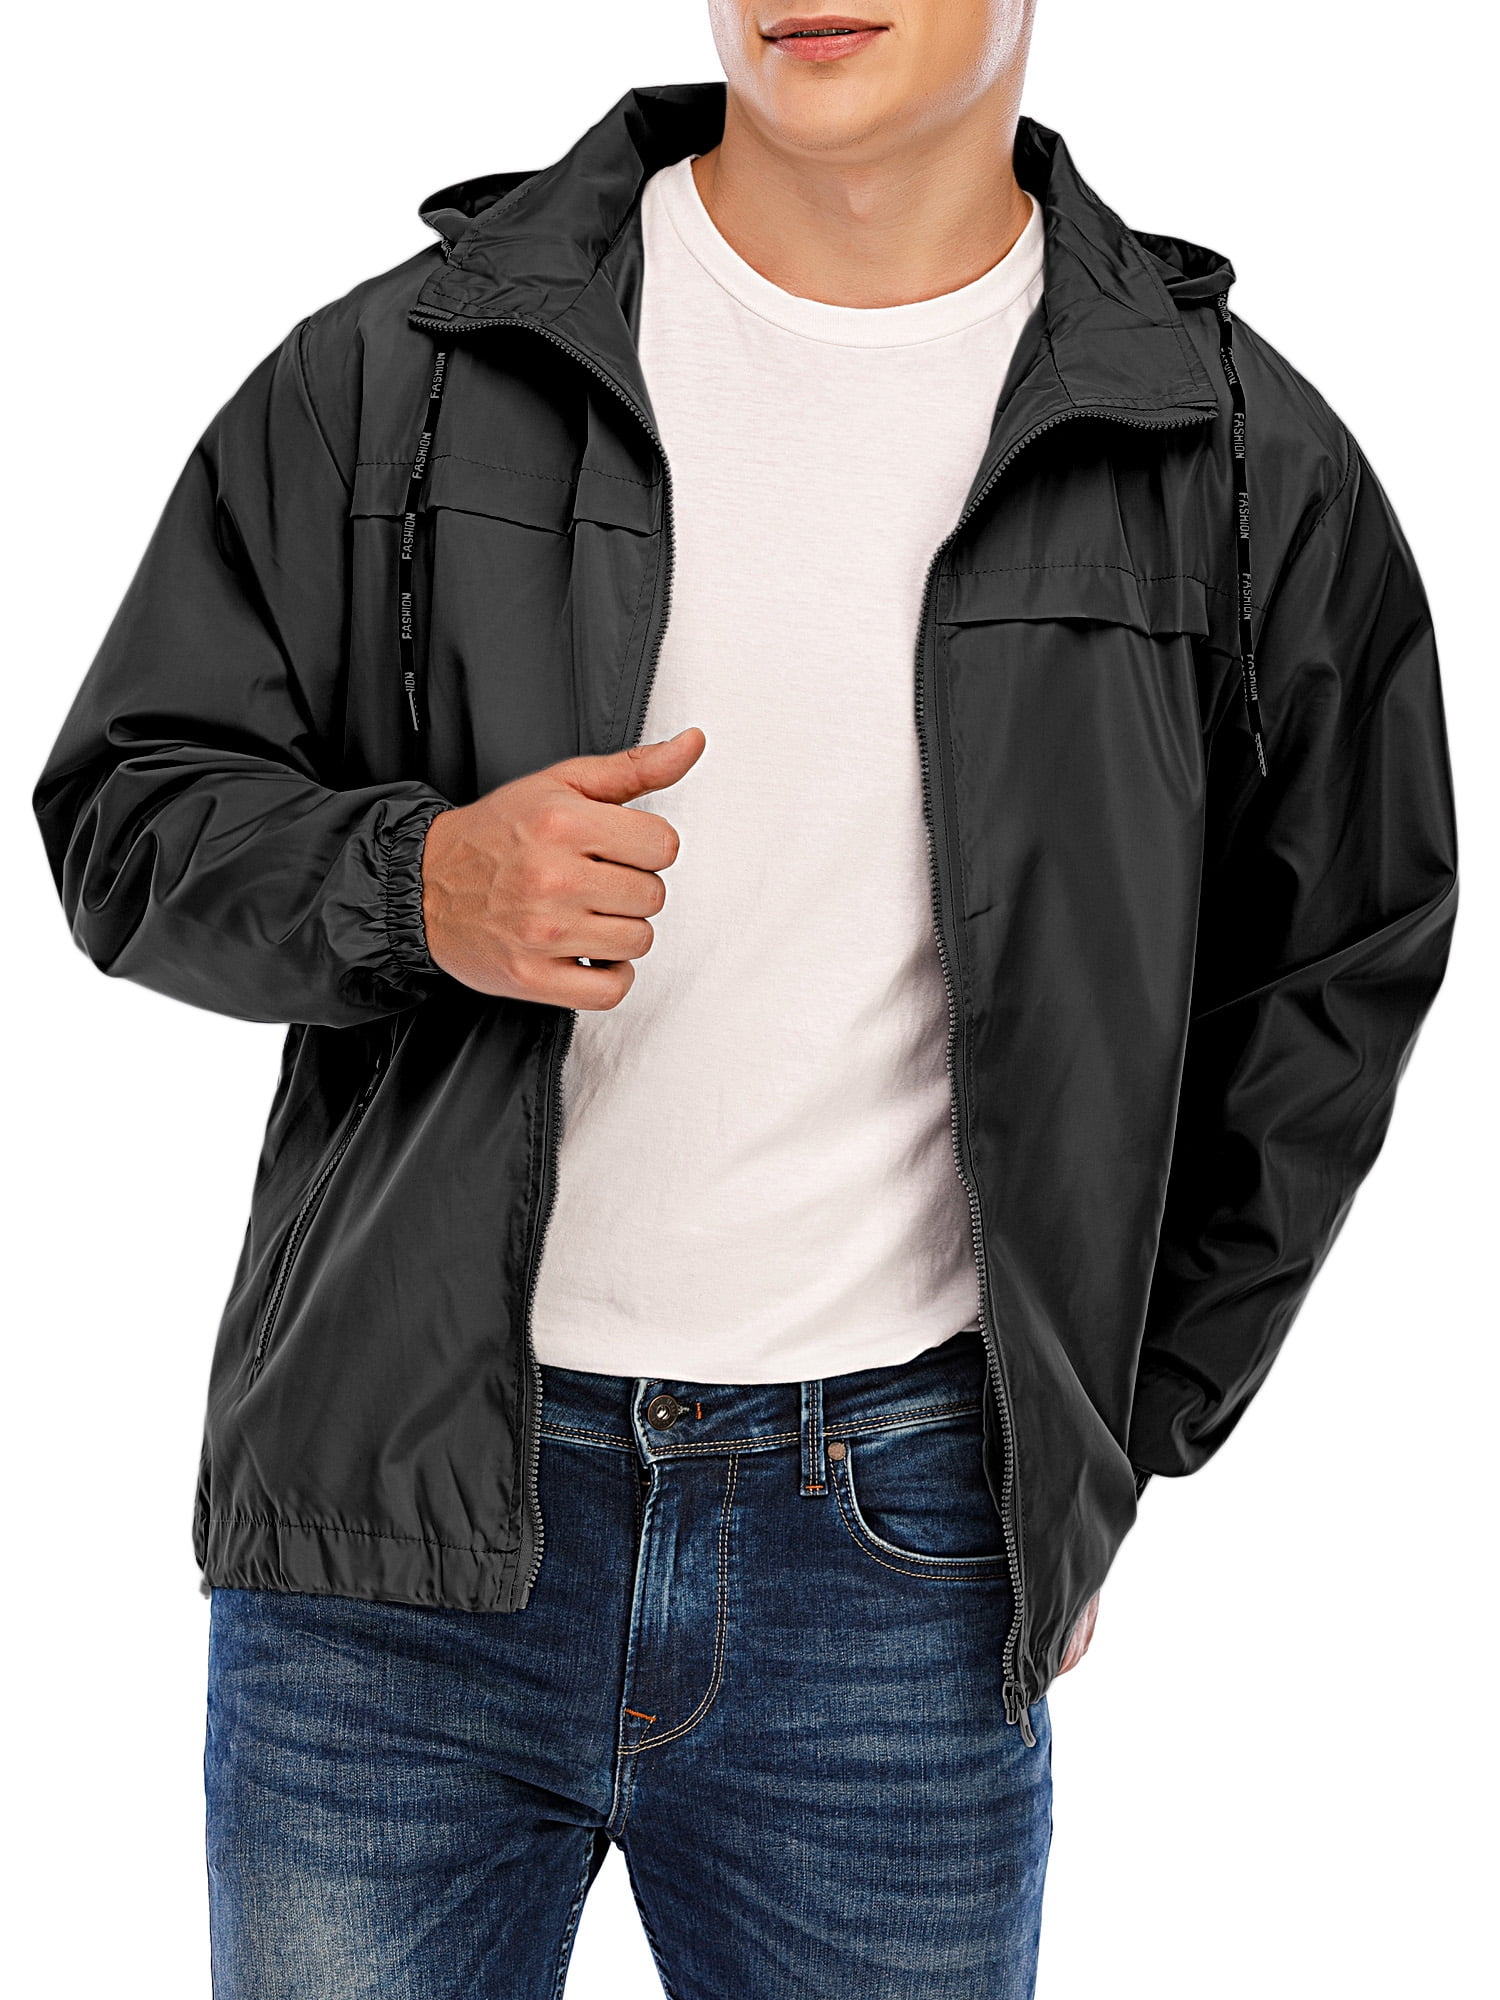 LELINTA Men's Big and Tall Outdoor Lightweight Windbreaker Jacket